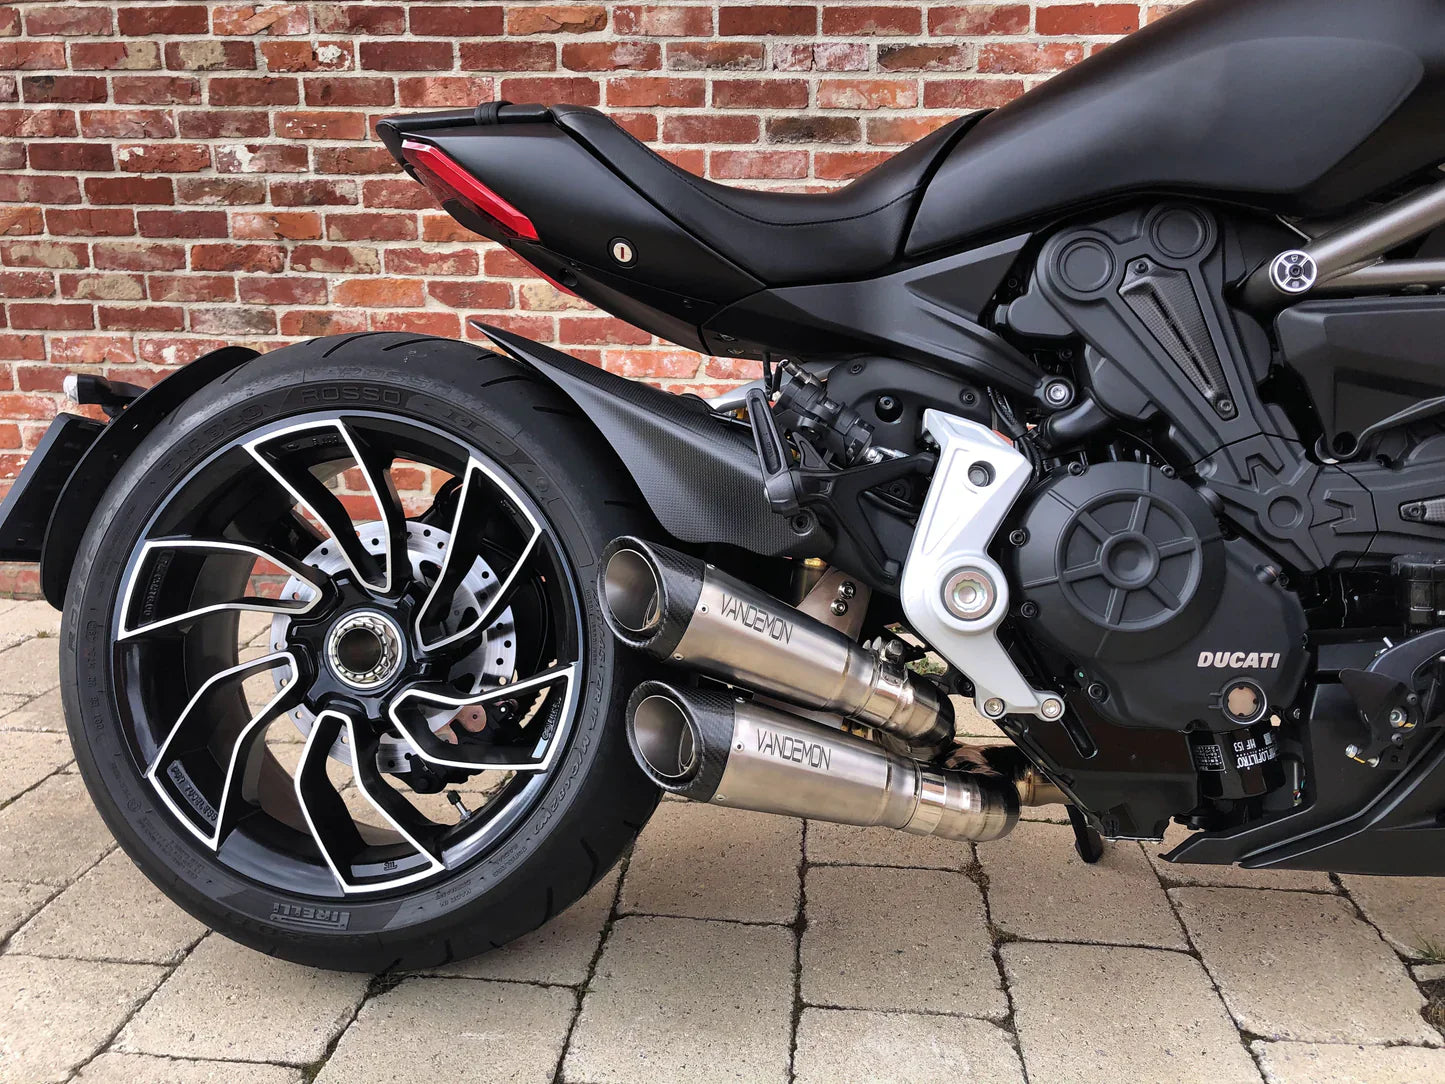 Vandemon Ducati XDiavel & Diavel S 1260 Vandemon Titanium Exhaust System 2016-22 SKU: DUCDVLTITANEXHA